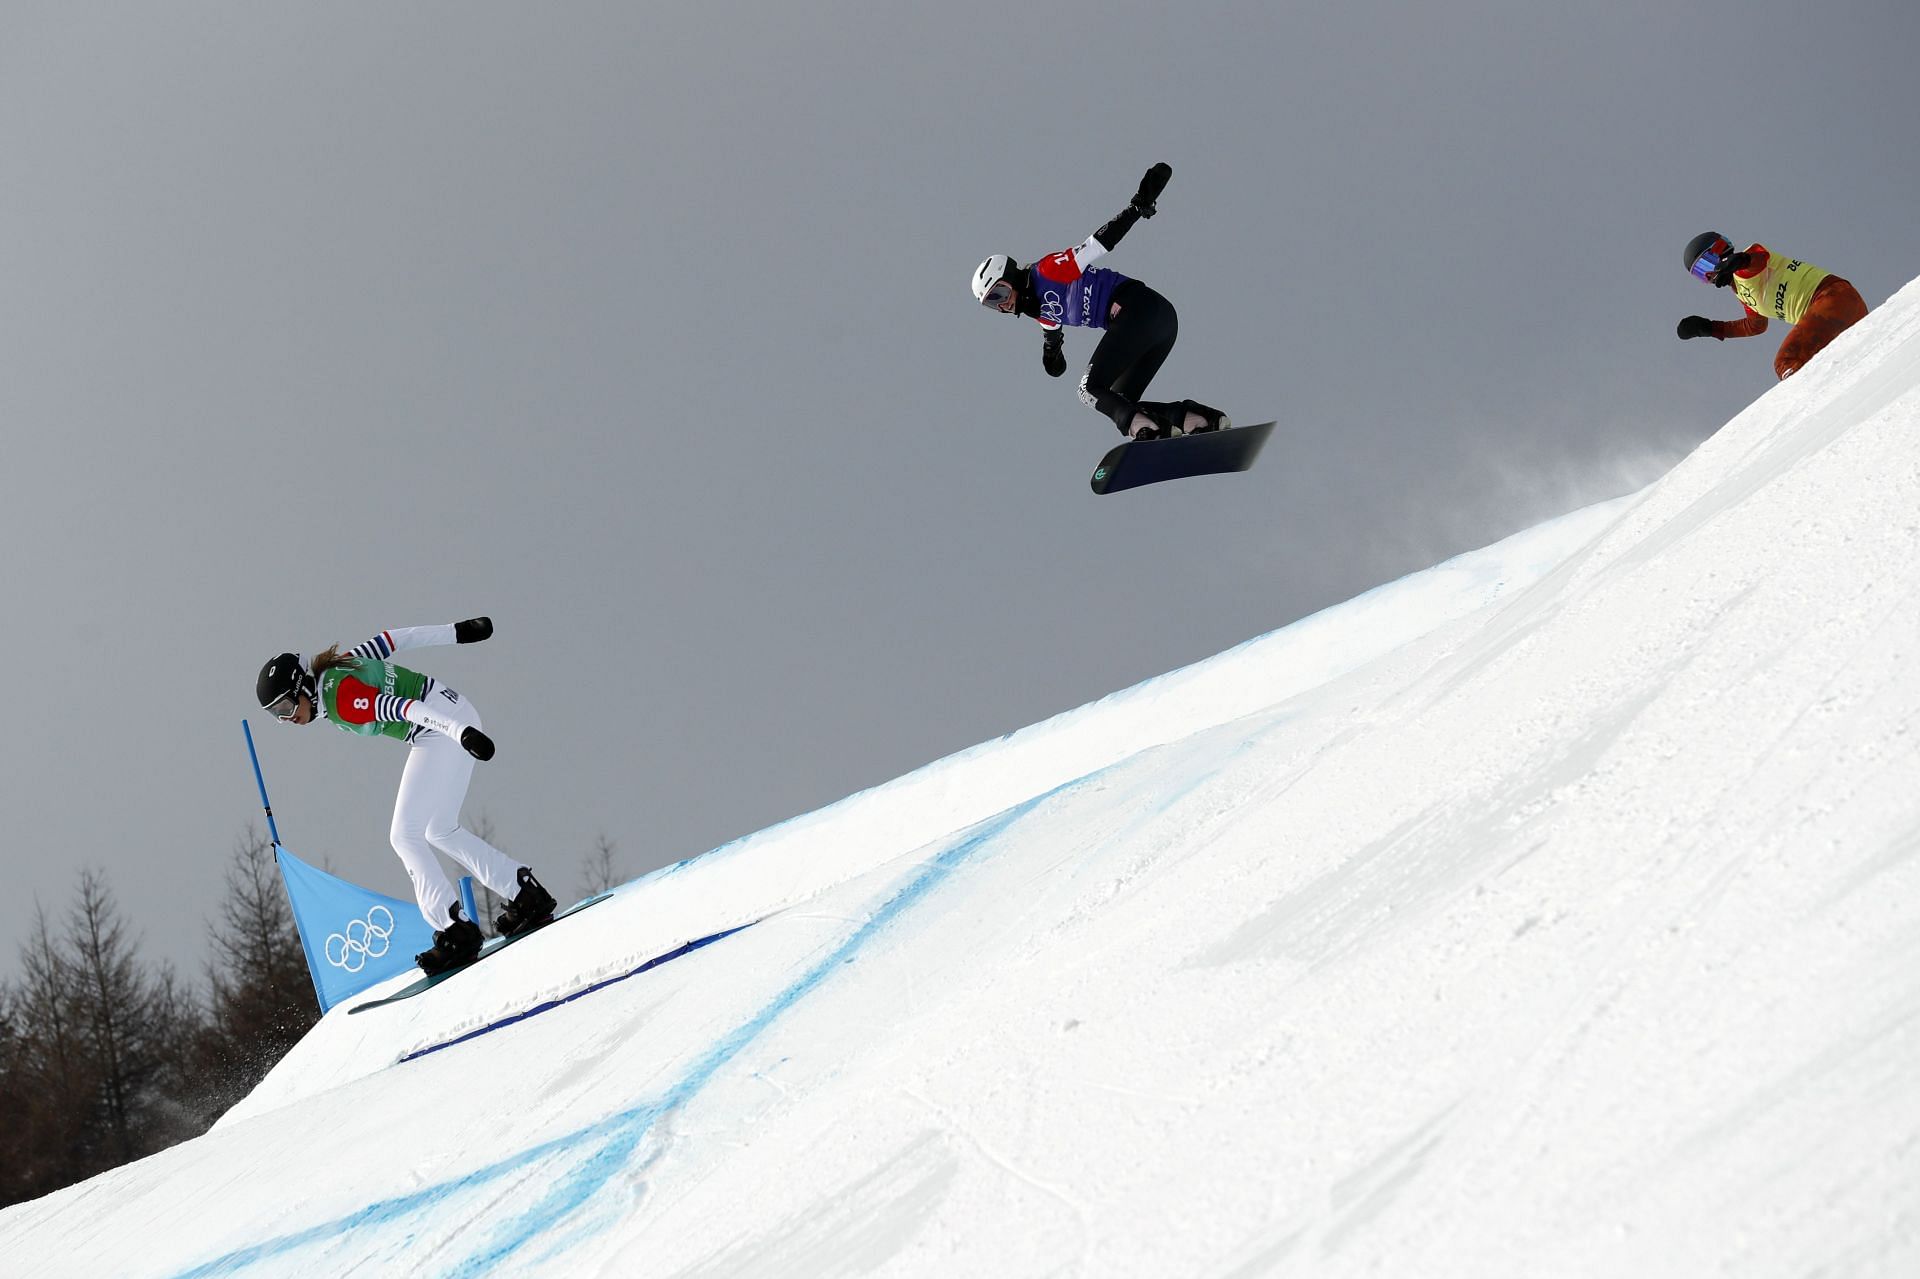 Snowboard - Winter Olympics Day 5